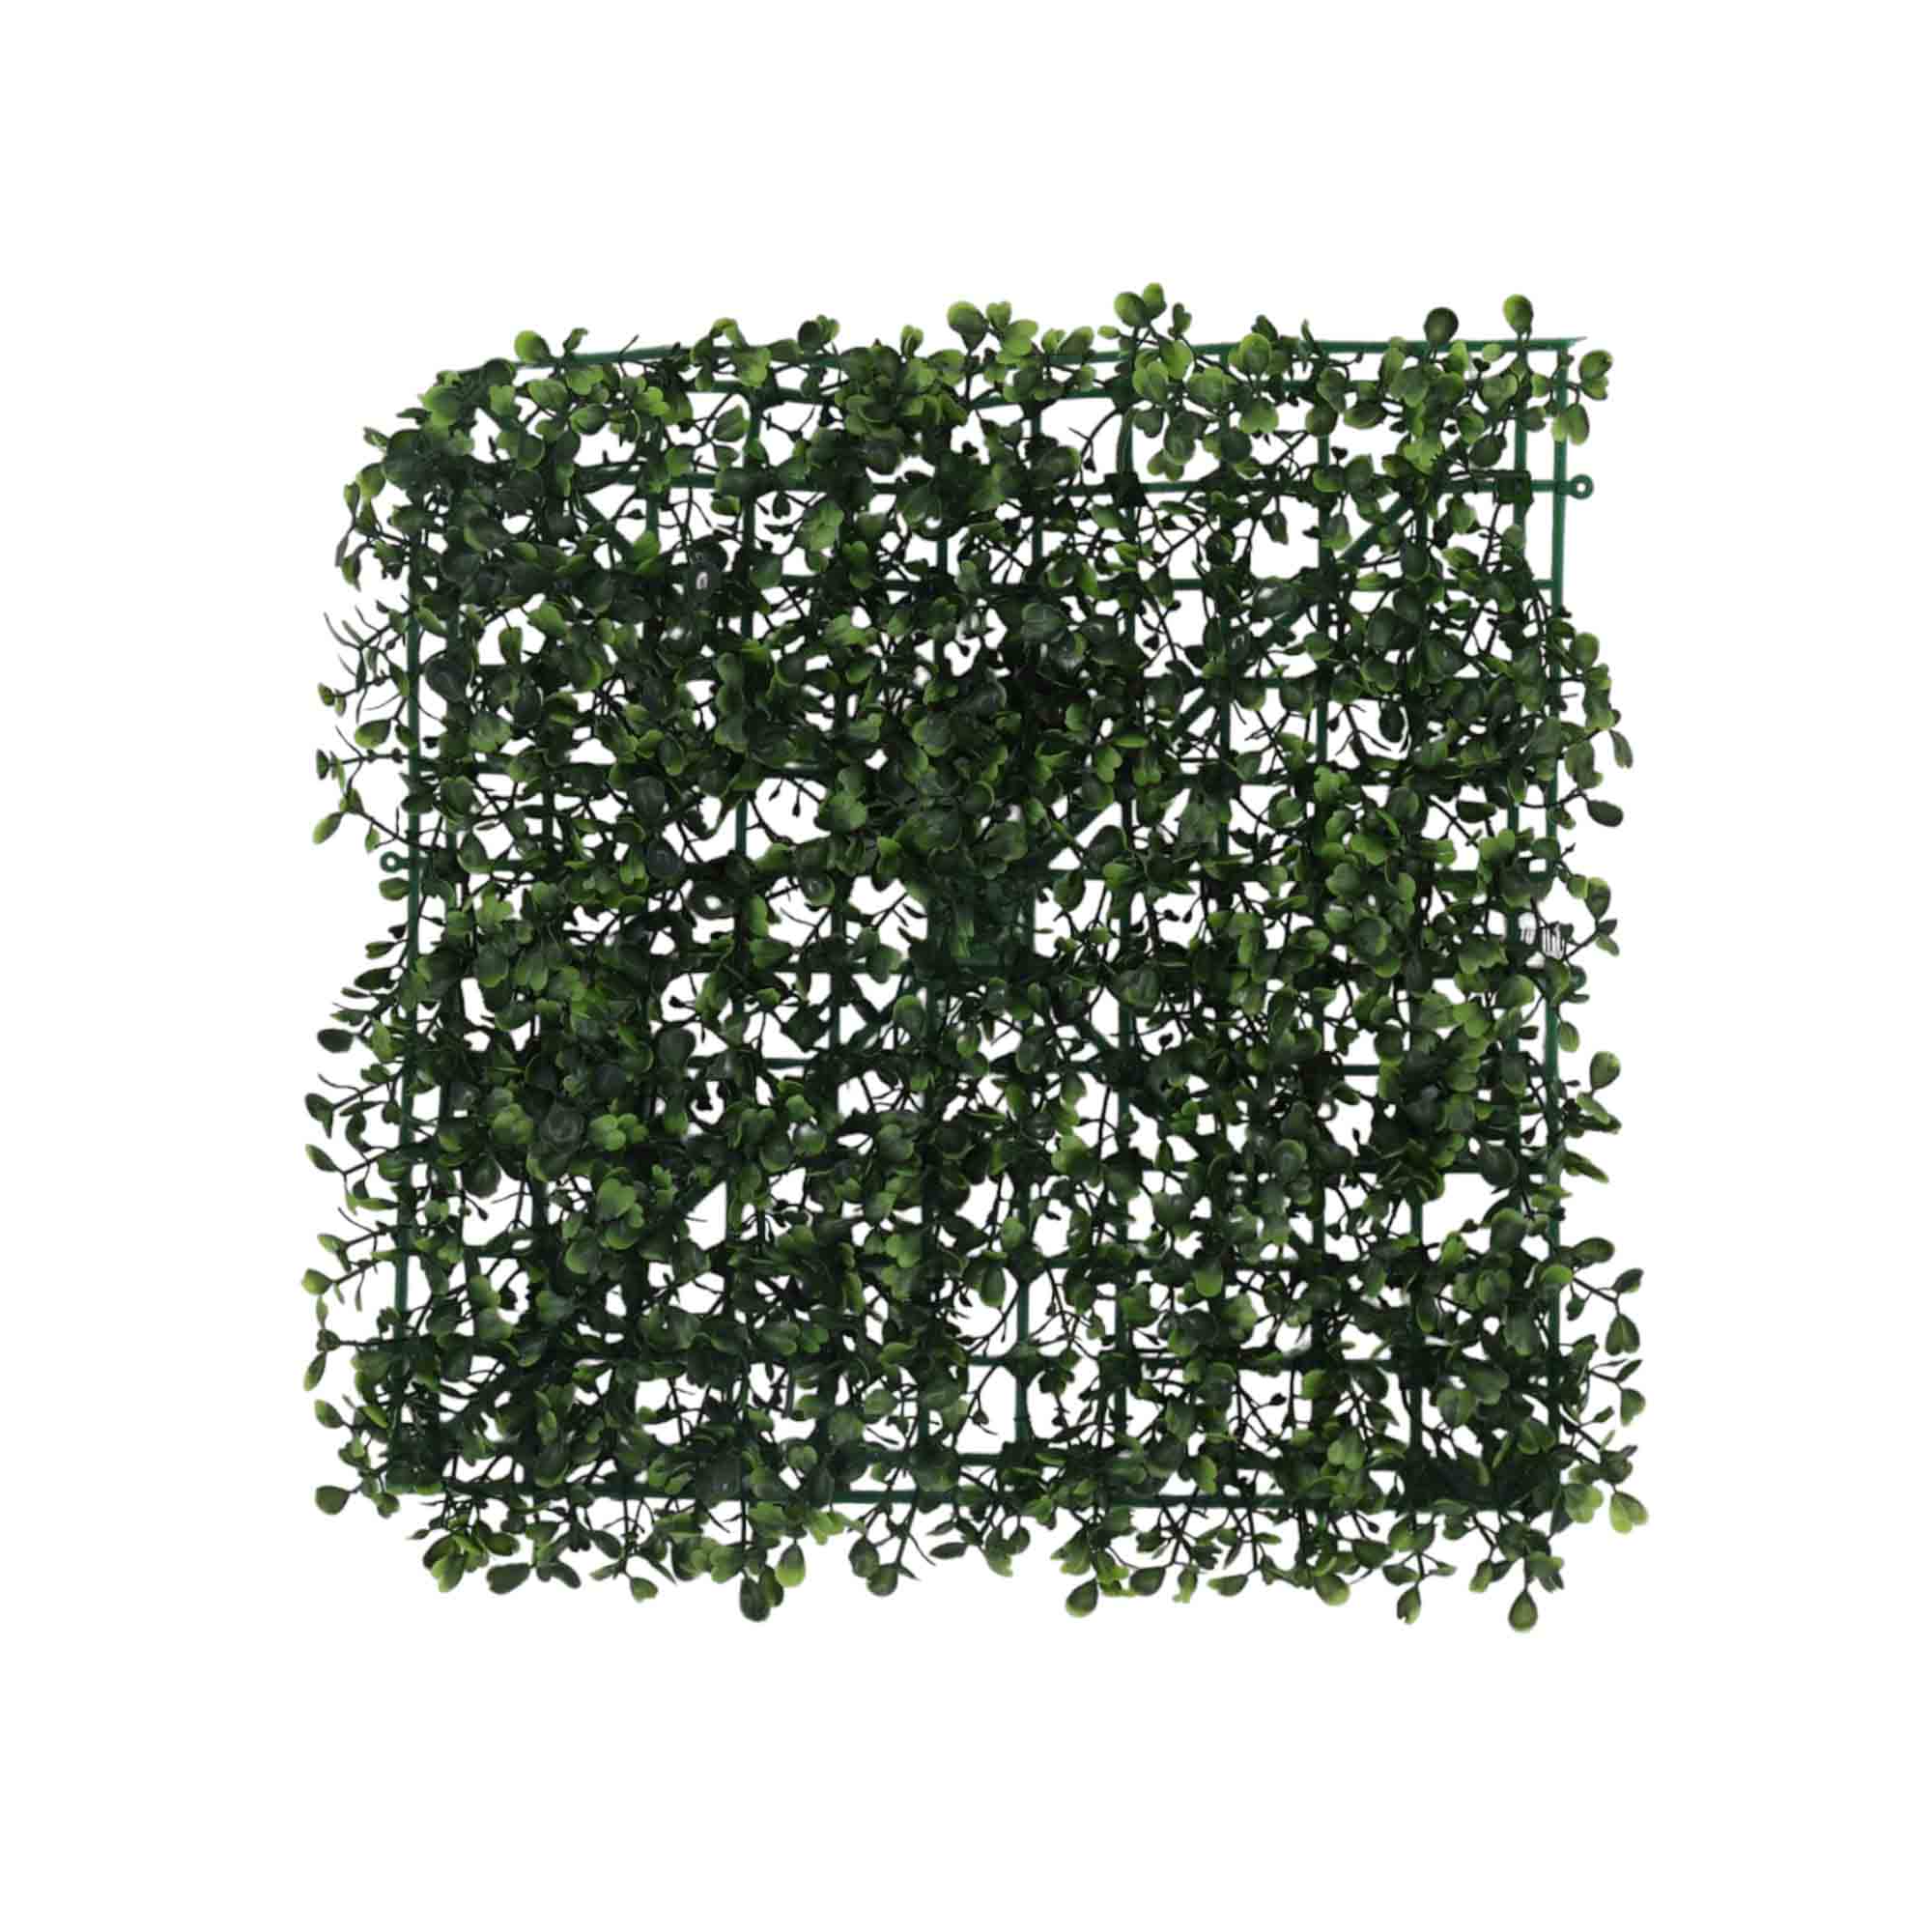 Artificial Decorative Lawn 30x30cm Grass Turf